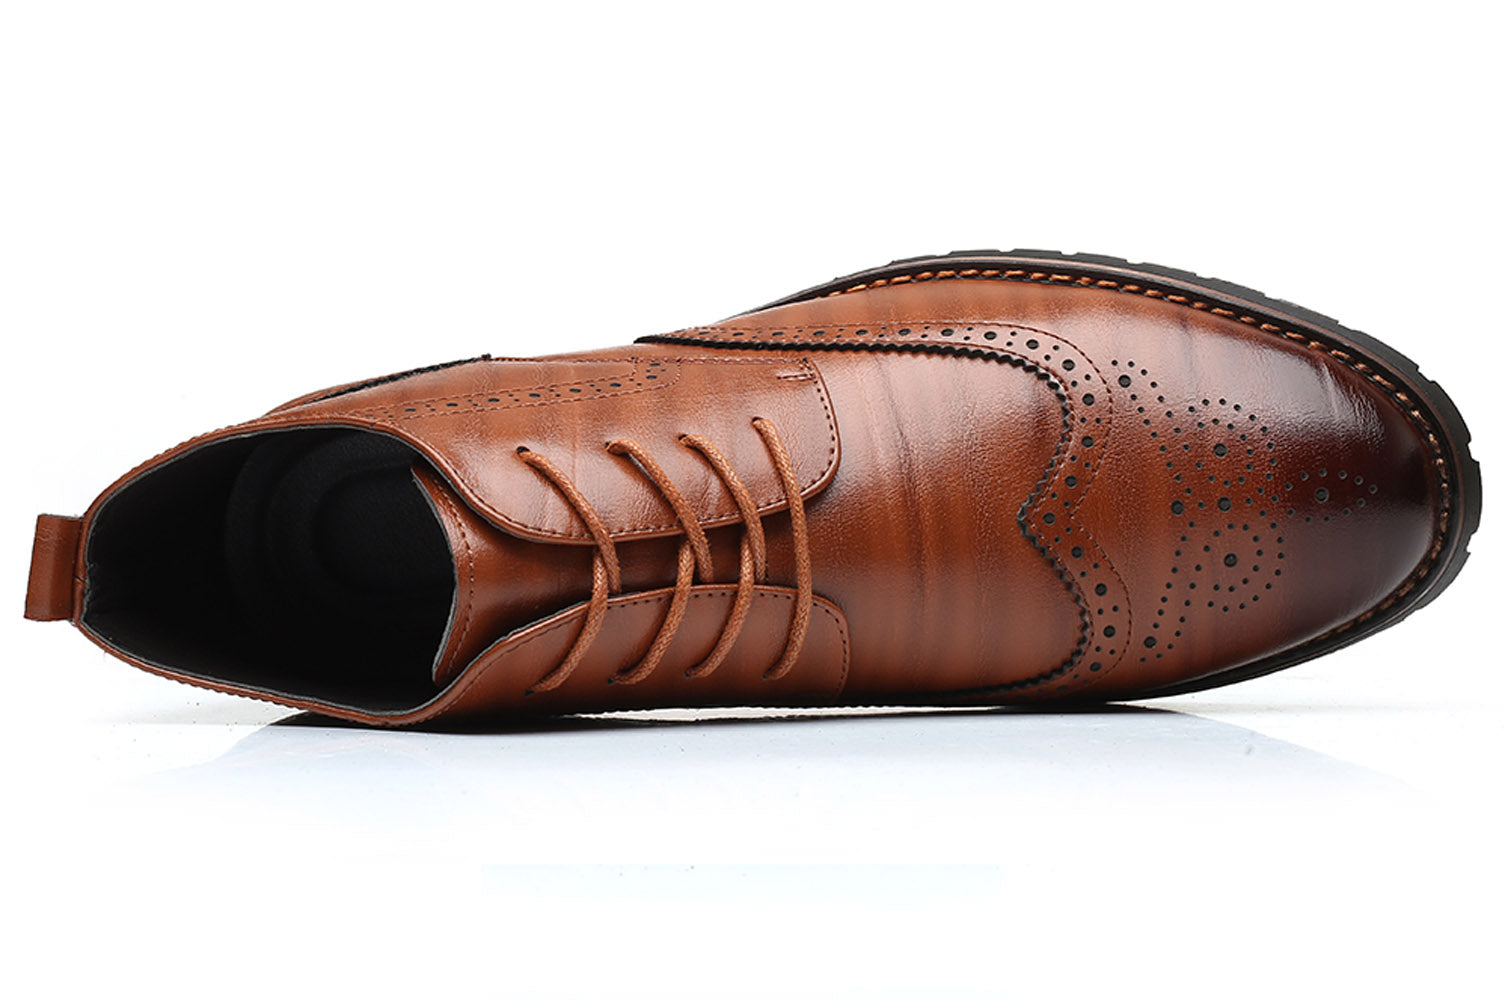 Men's Wingtip Brogue Casual Boots